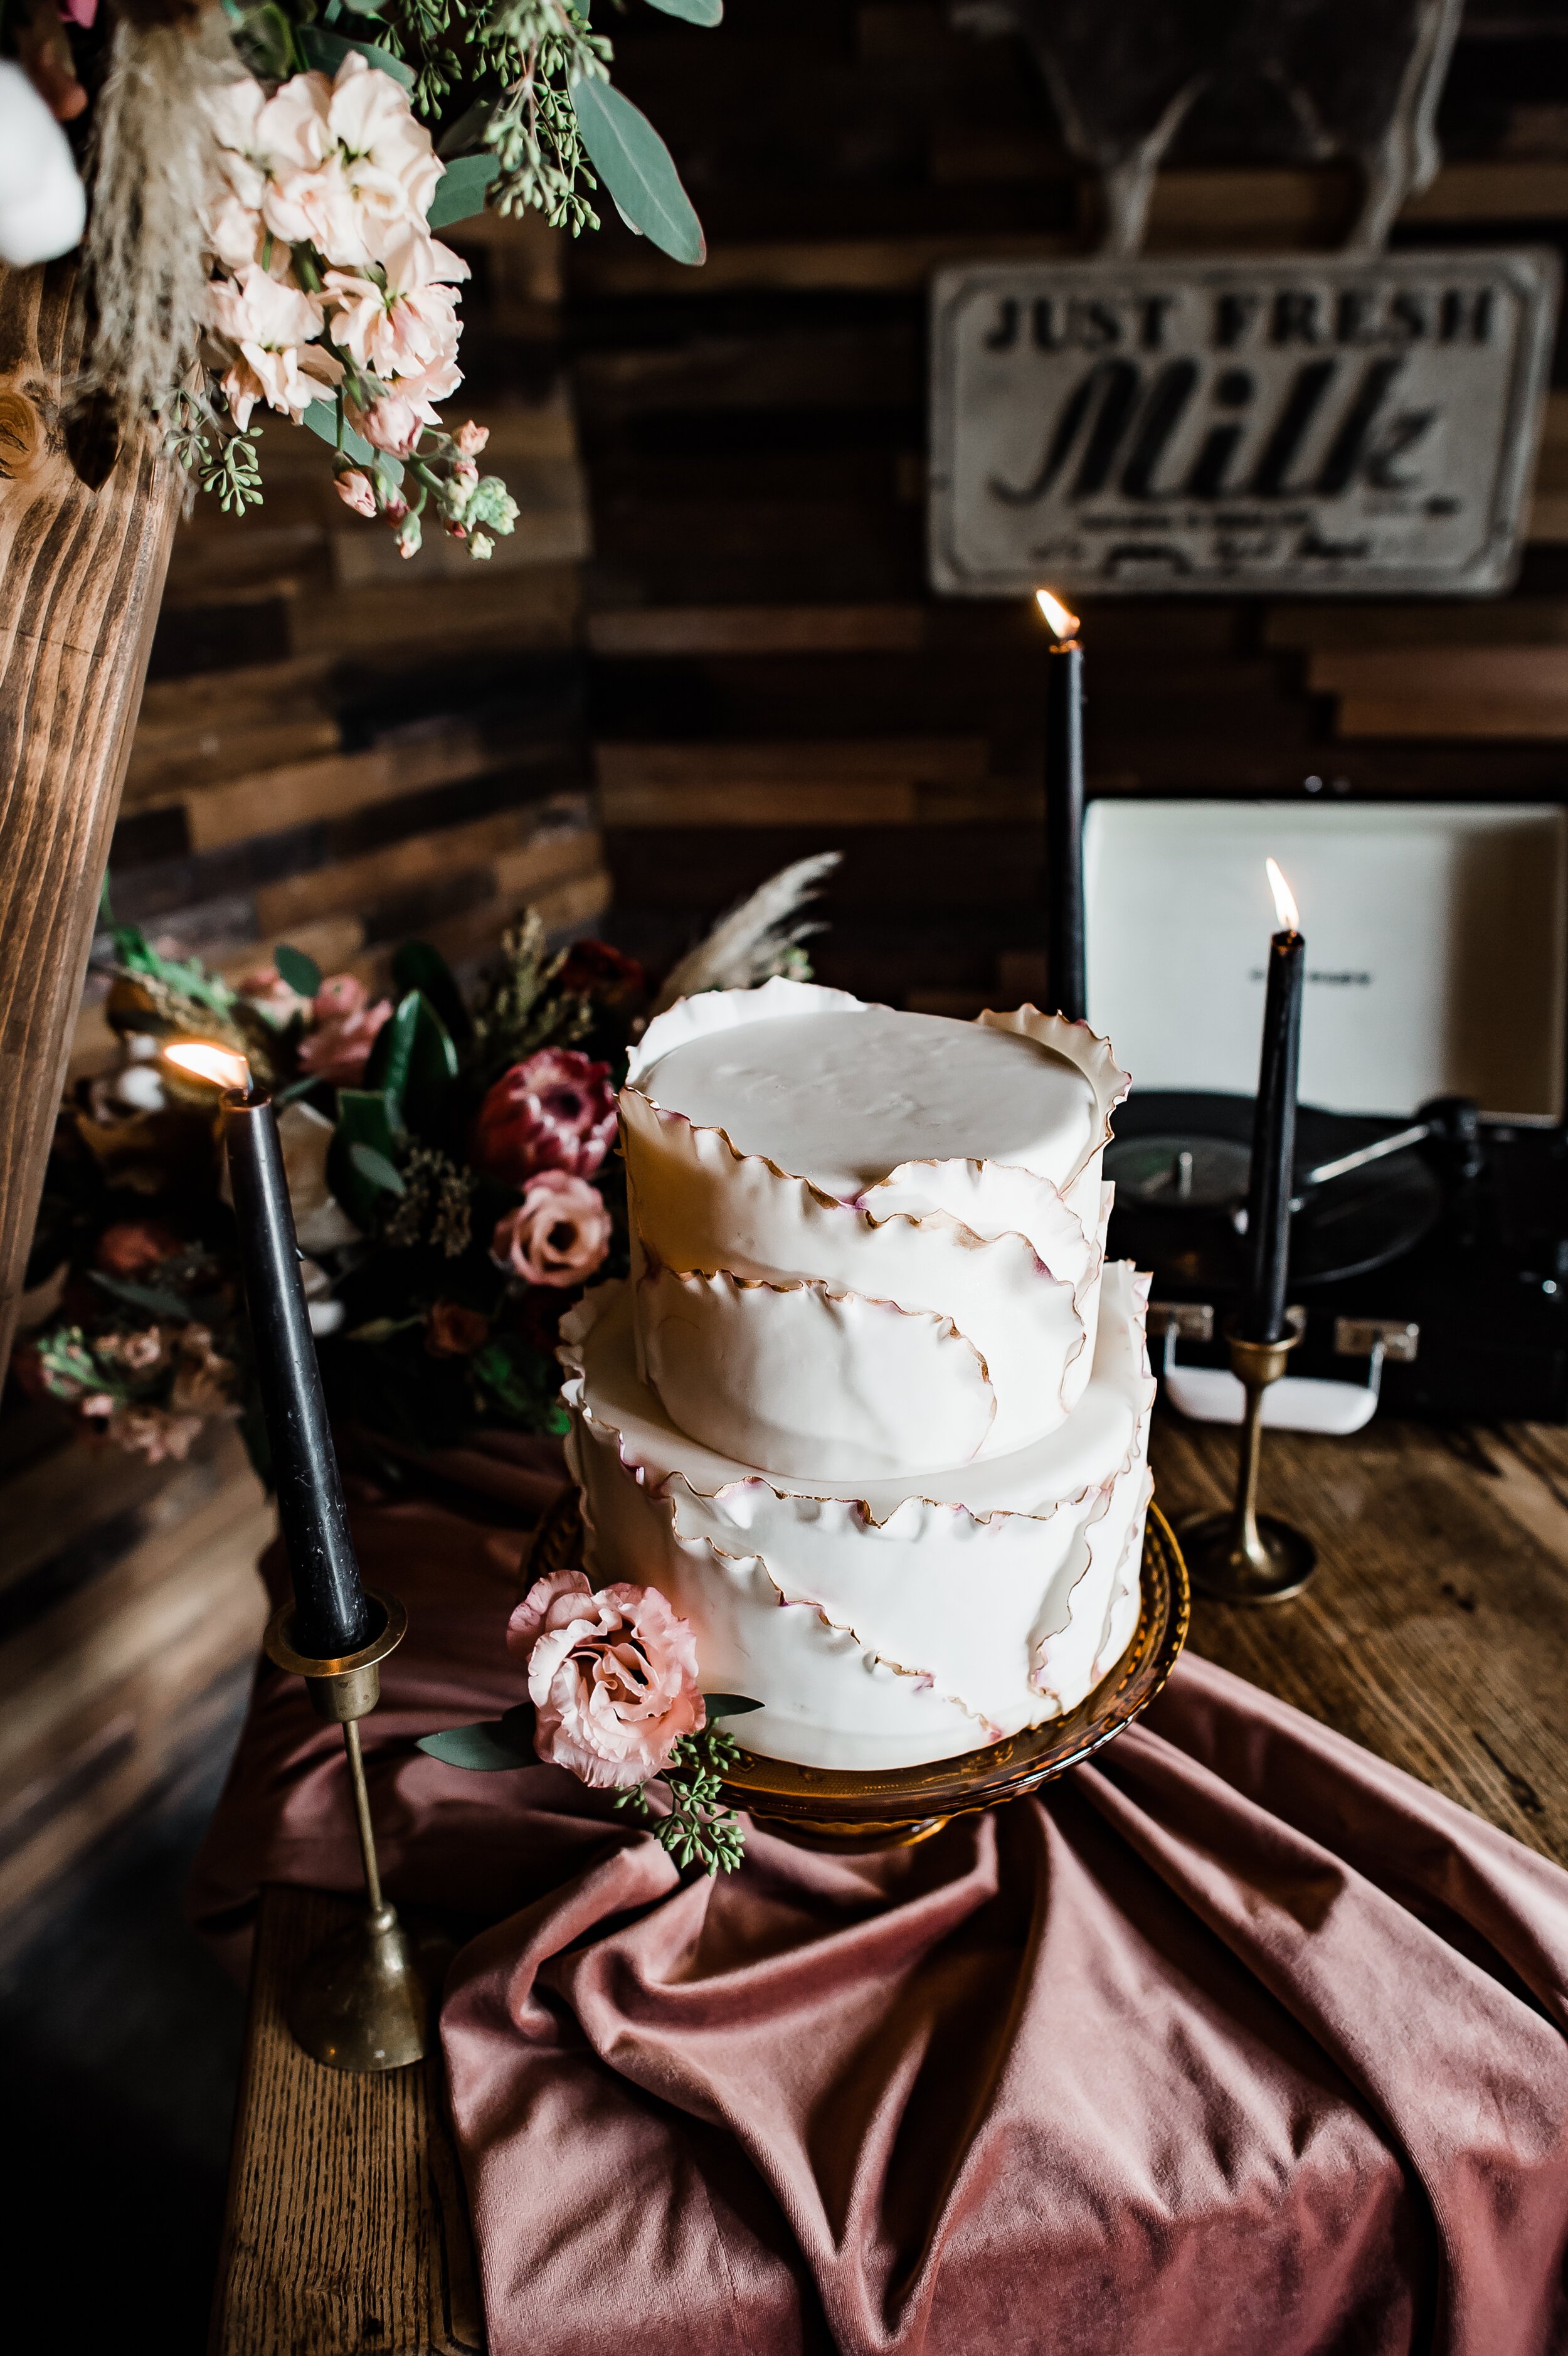 www.santabarbarawedding.com | Cafe Fiore | Michelle Ramirez | Simply S Events | Tangled Lotus | La Tavola | Honey Silks Co. | Otis + Pearl | Golden Mittens Bakery | Wedding Cake 